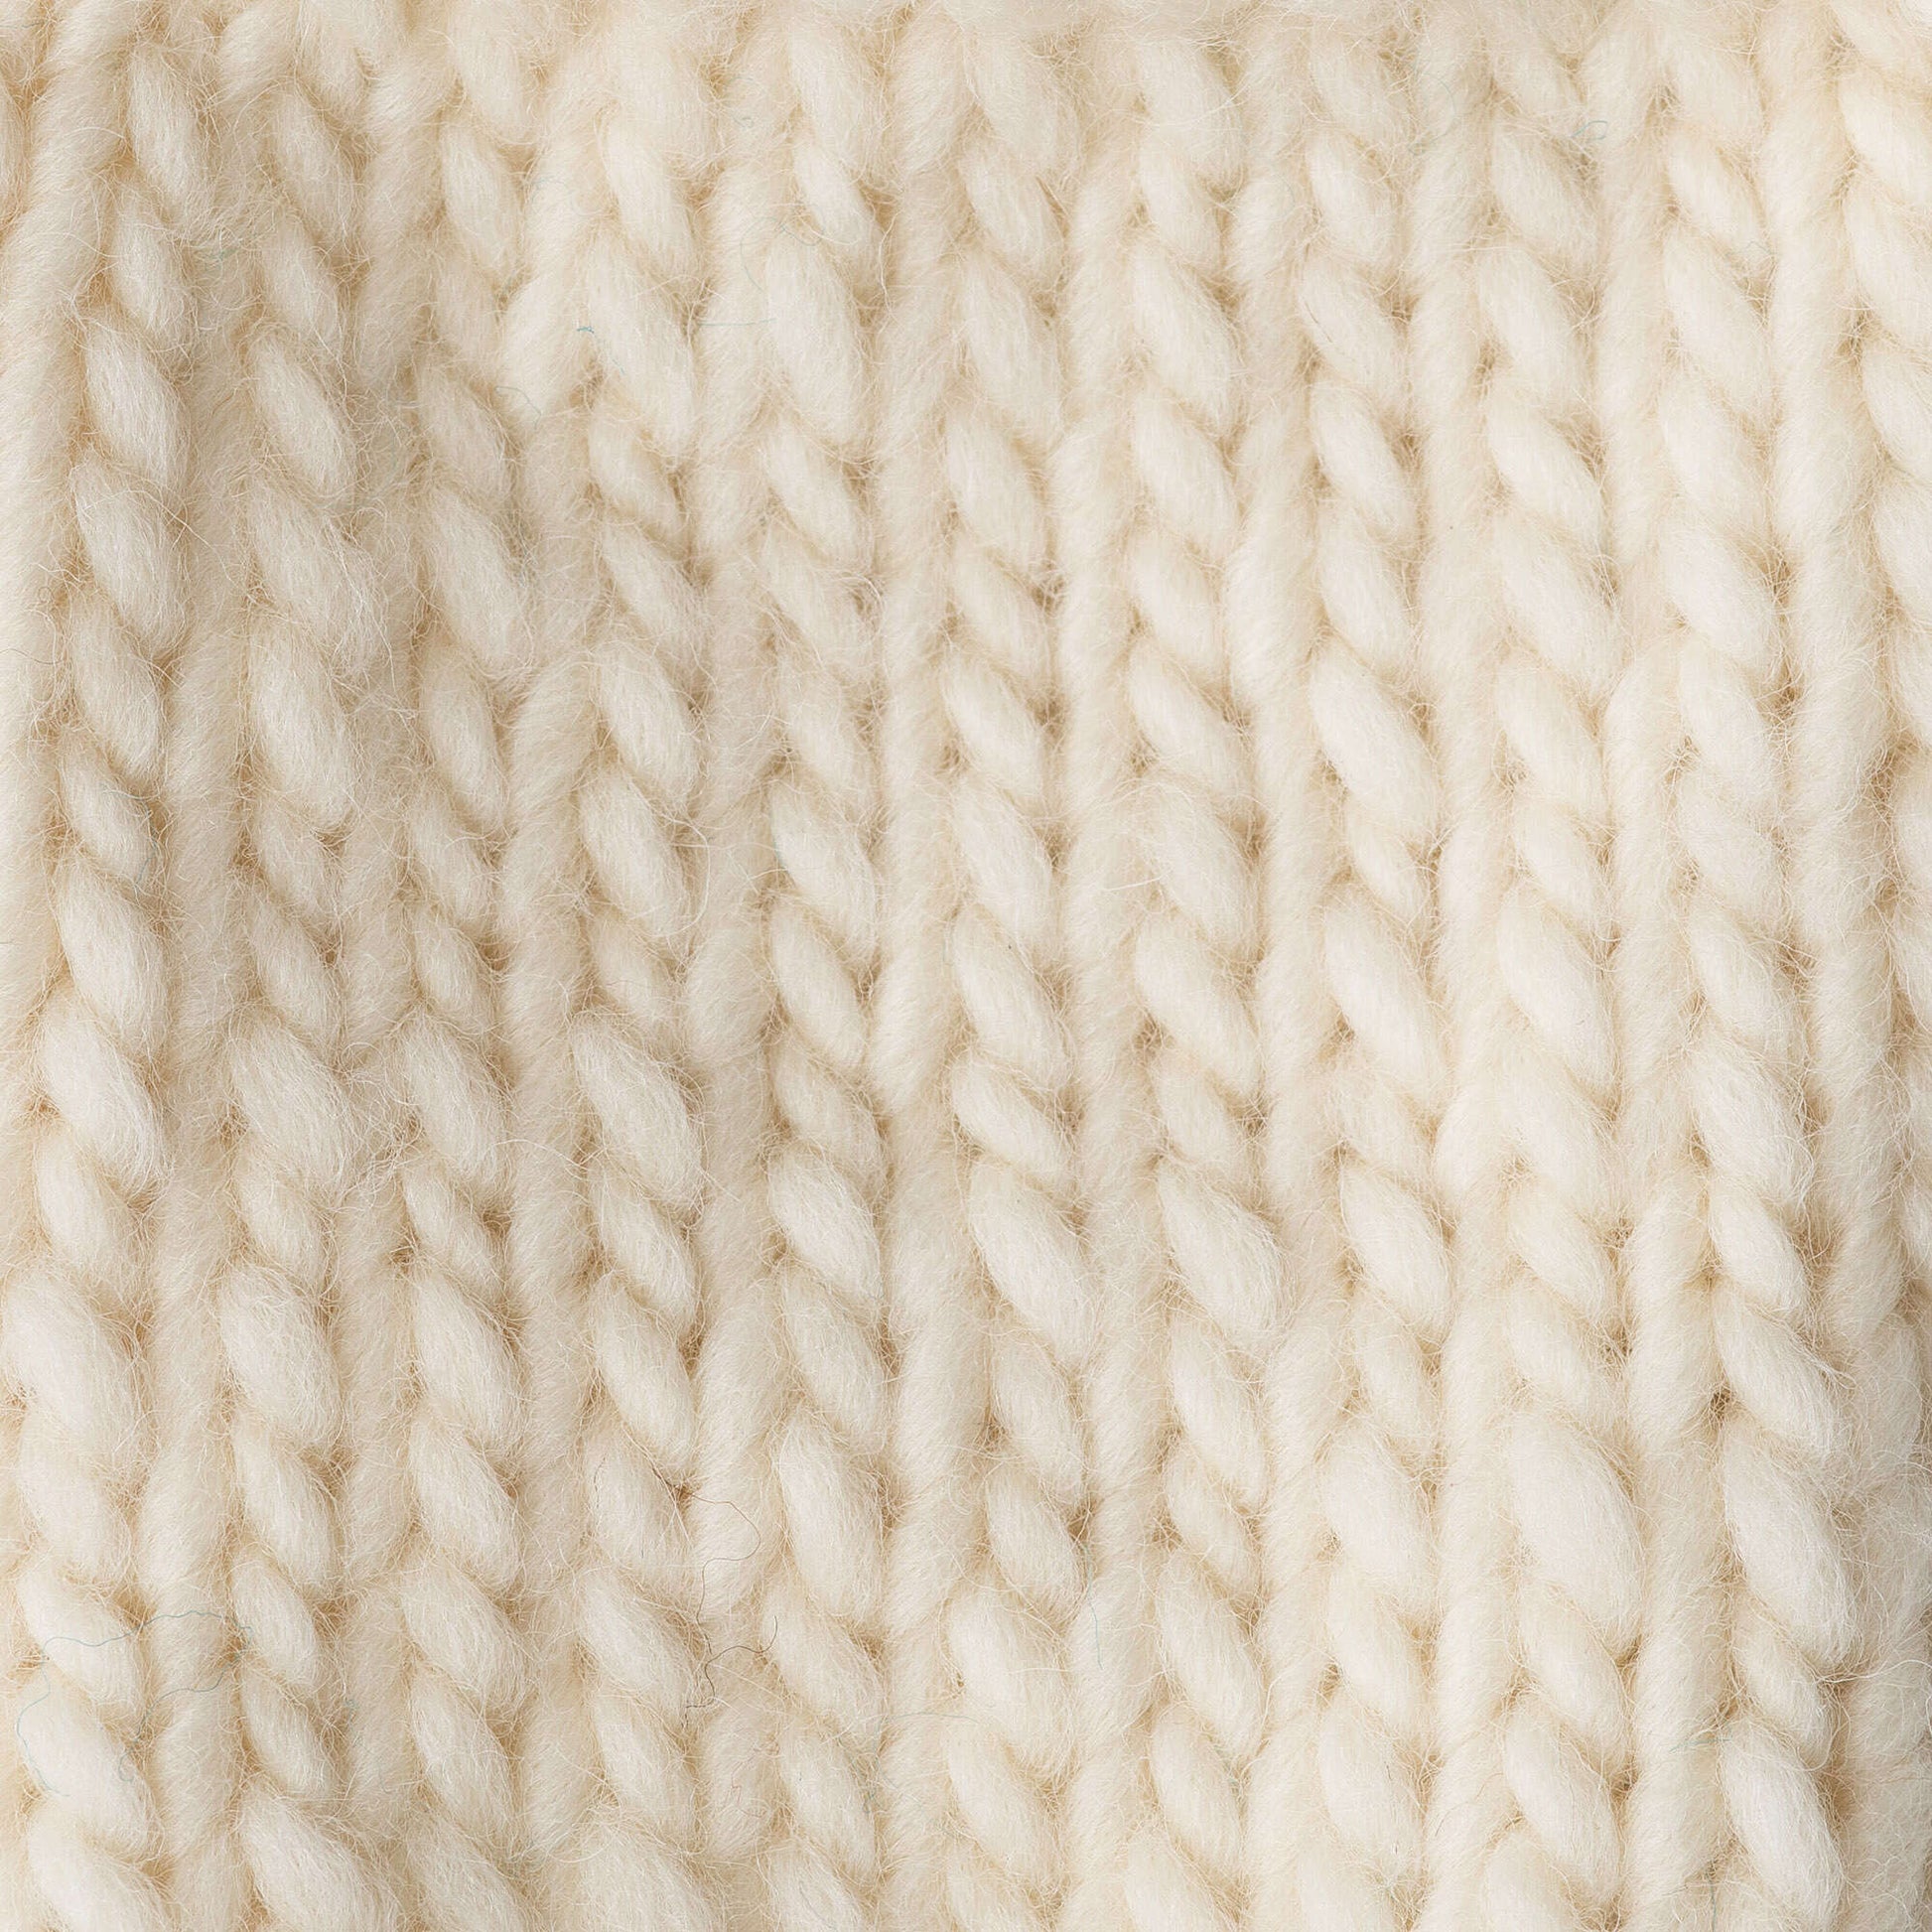 Patons Classic Wool Cherry Yarn - 5 Pack of 3.5oz/100g - Wool - 5 Bulky -  120 Yards - Knitting/Crochet